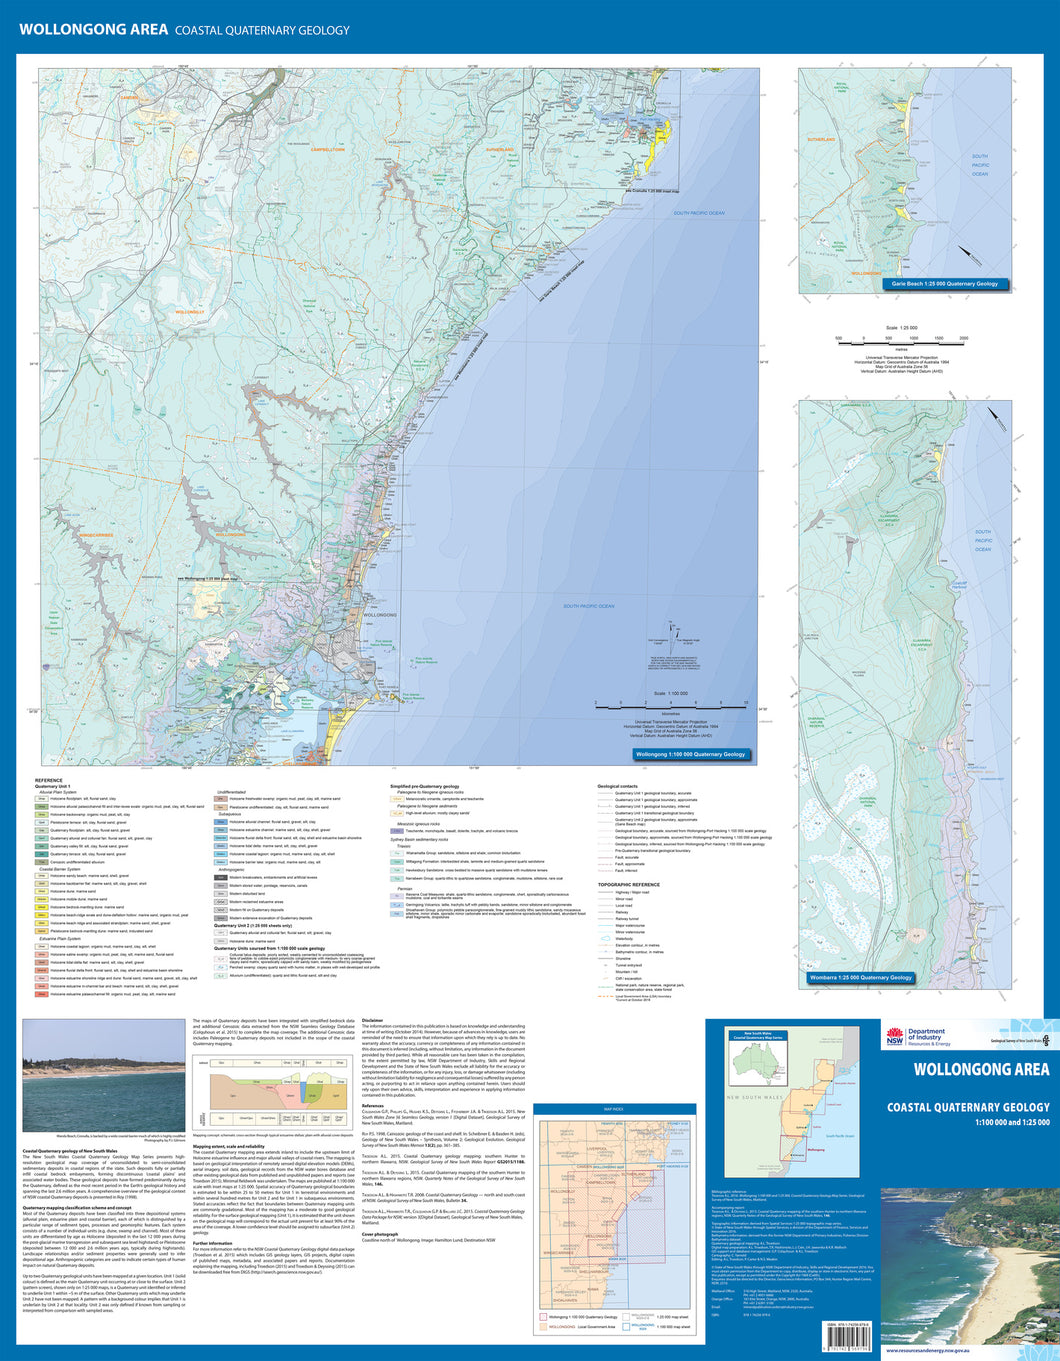 Image of Wollongong Area Coastal Quaternary Geology map